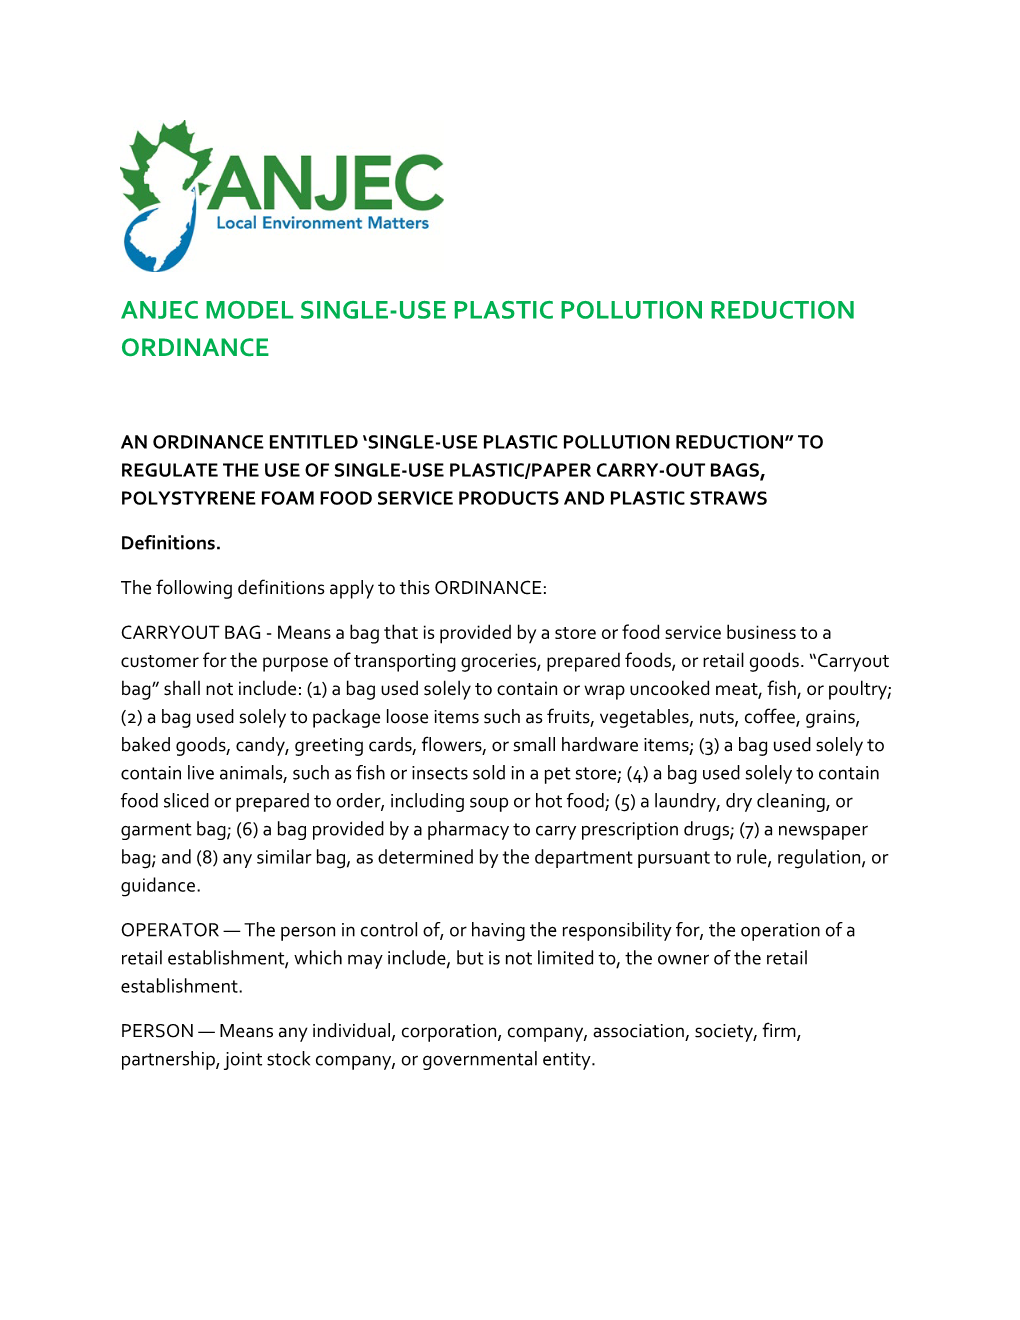 Anjec Model Single-Use Plastic Pollution Reduction Ordinance